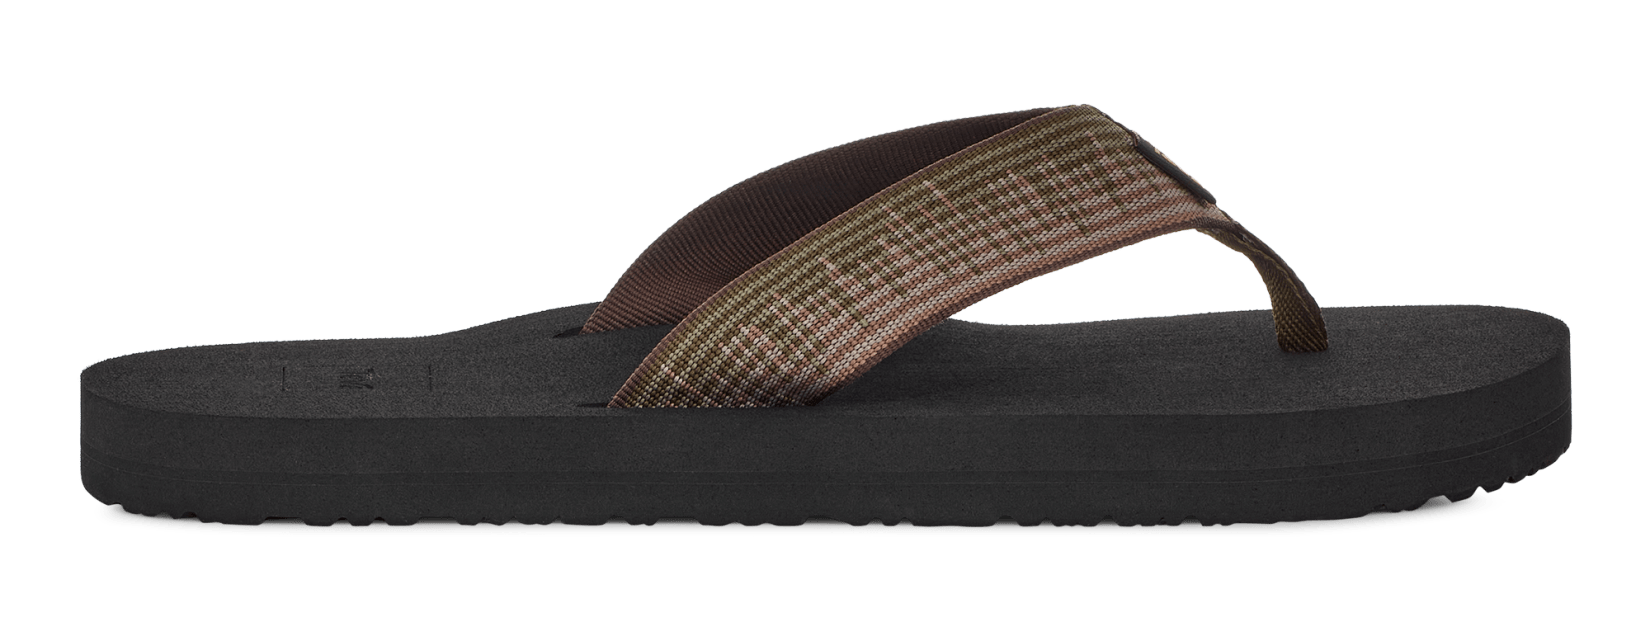 Teva® Mush | Most Comfortable Sandals at Teva.com